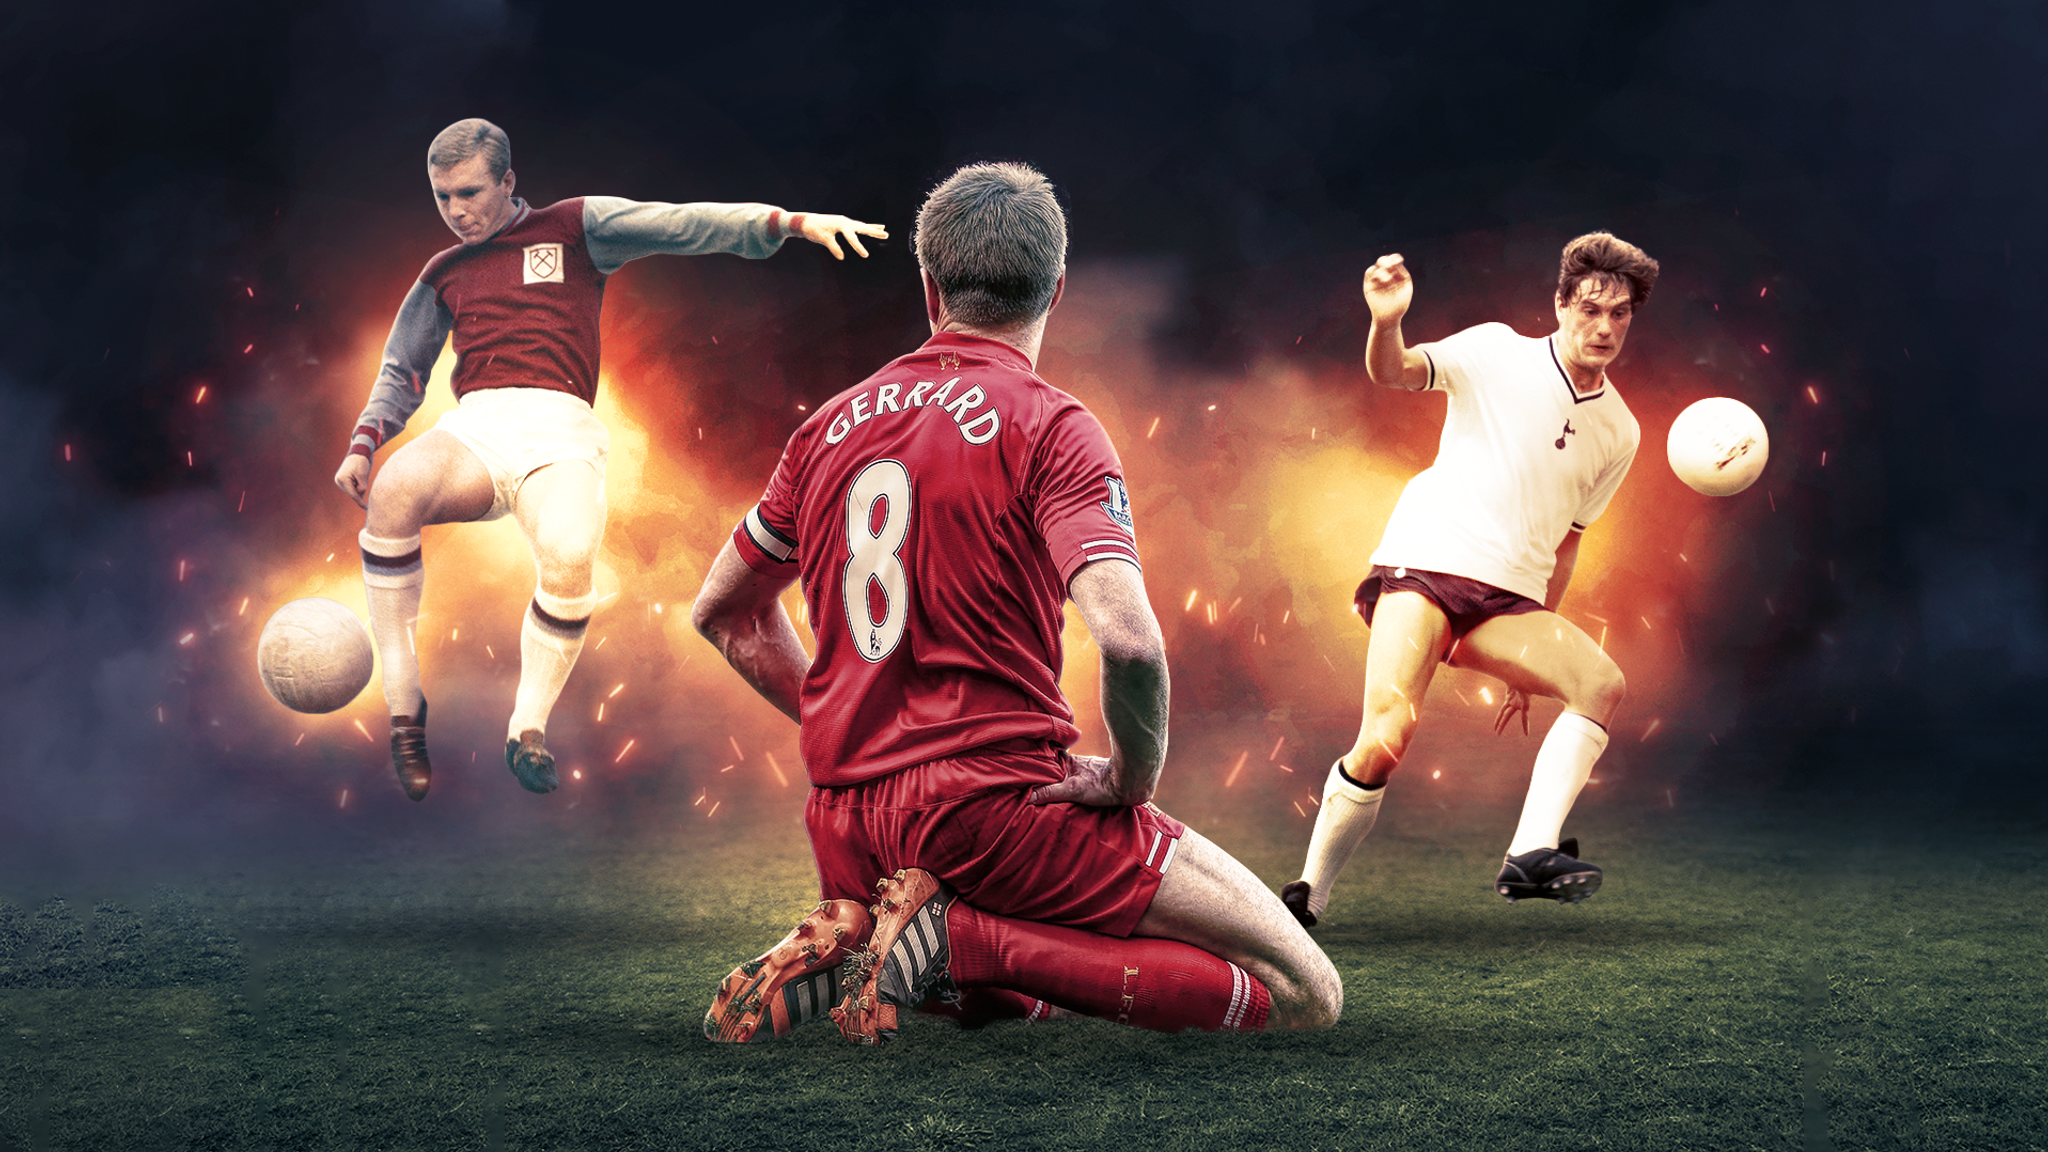 Soccer, football or whatever: Anderlecht Greatest All-Time Team